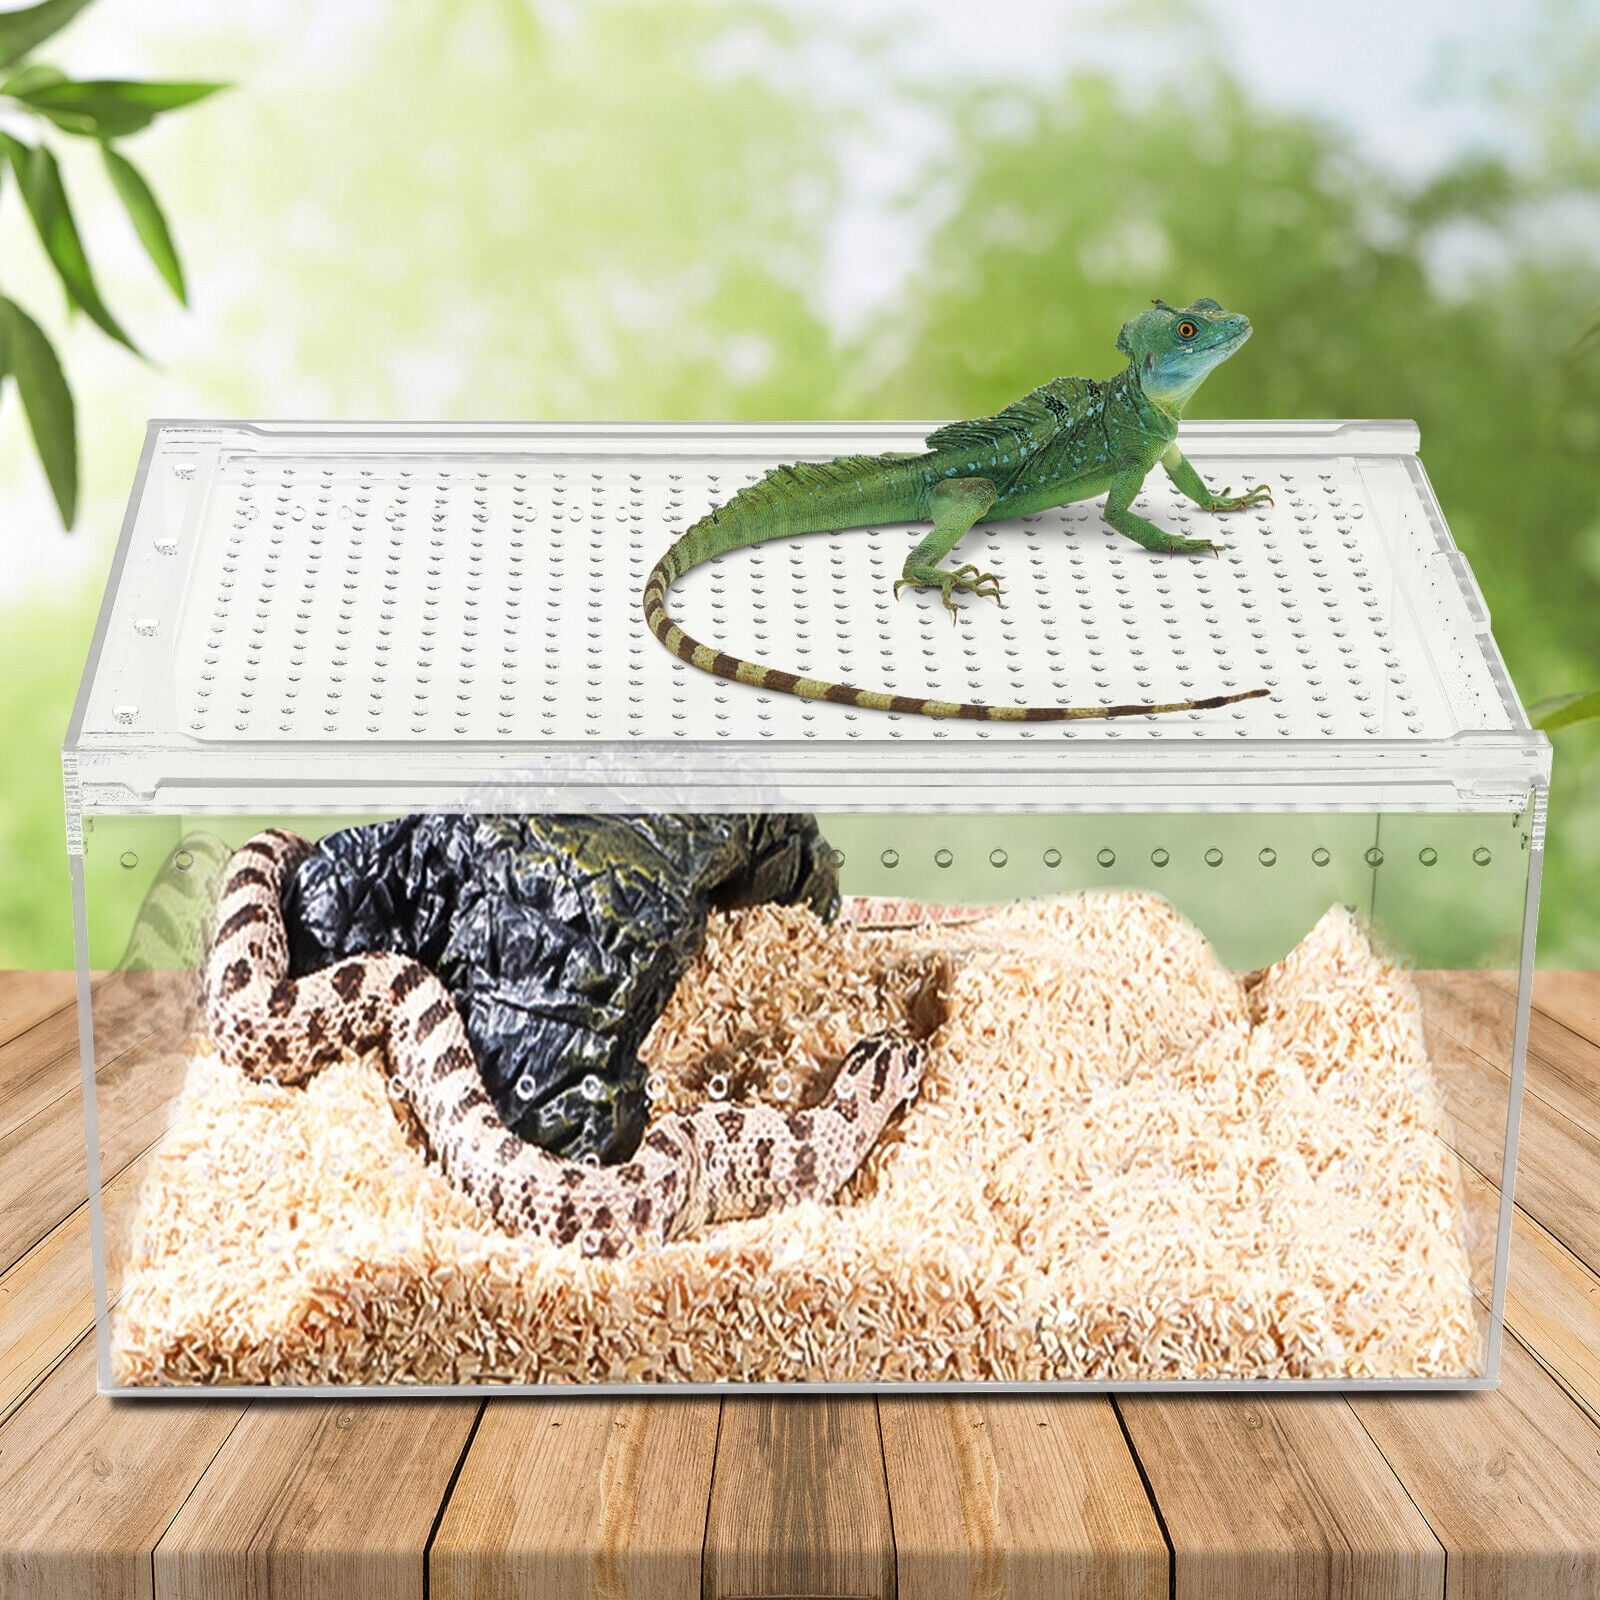 AIICIOO reptile Feeding Box, 8*4*4 Acrylic Reptile Enclosure Transparent  Reptile Pet Breeding Case for Spider, Lizard, Scorpion, Centipede, Horned  Frog, Beetle. 